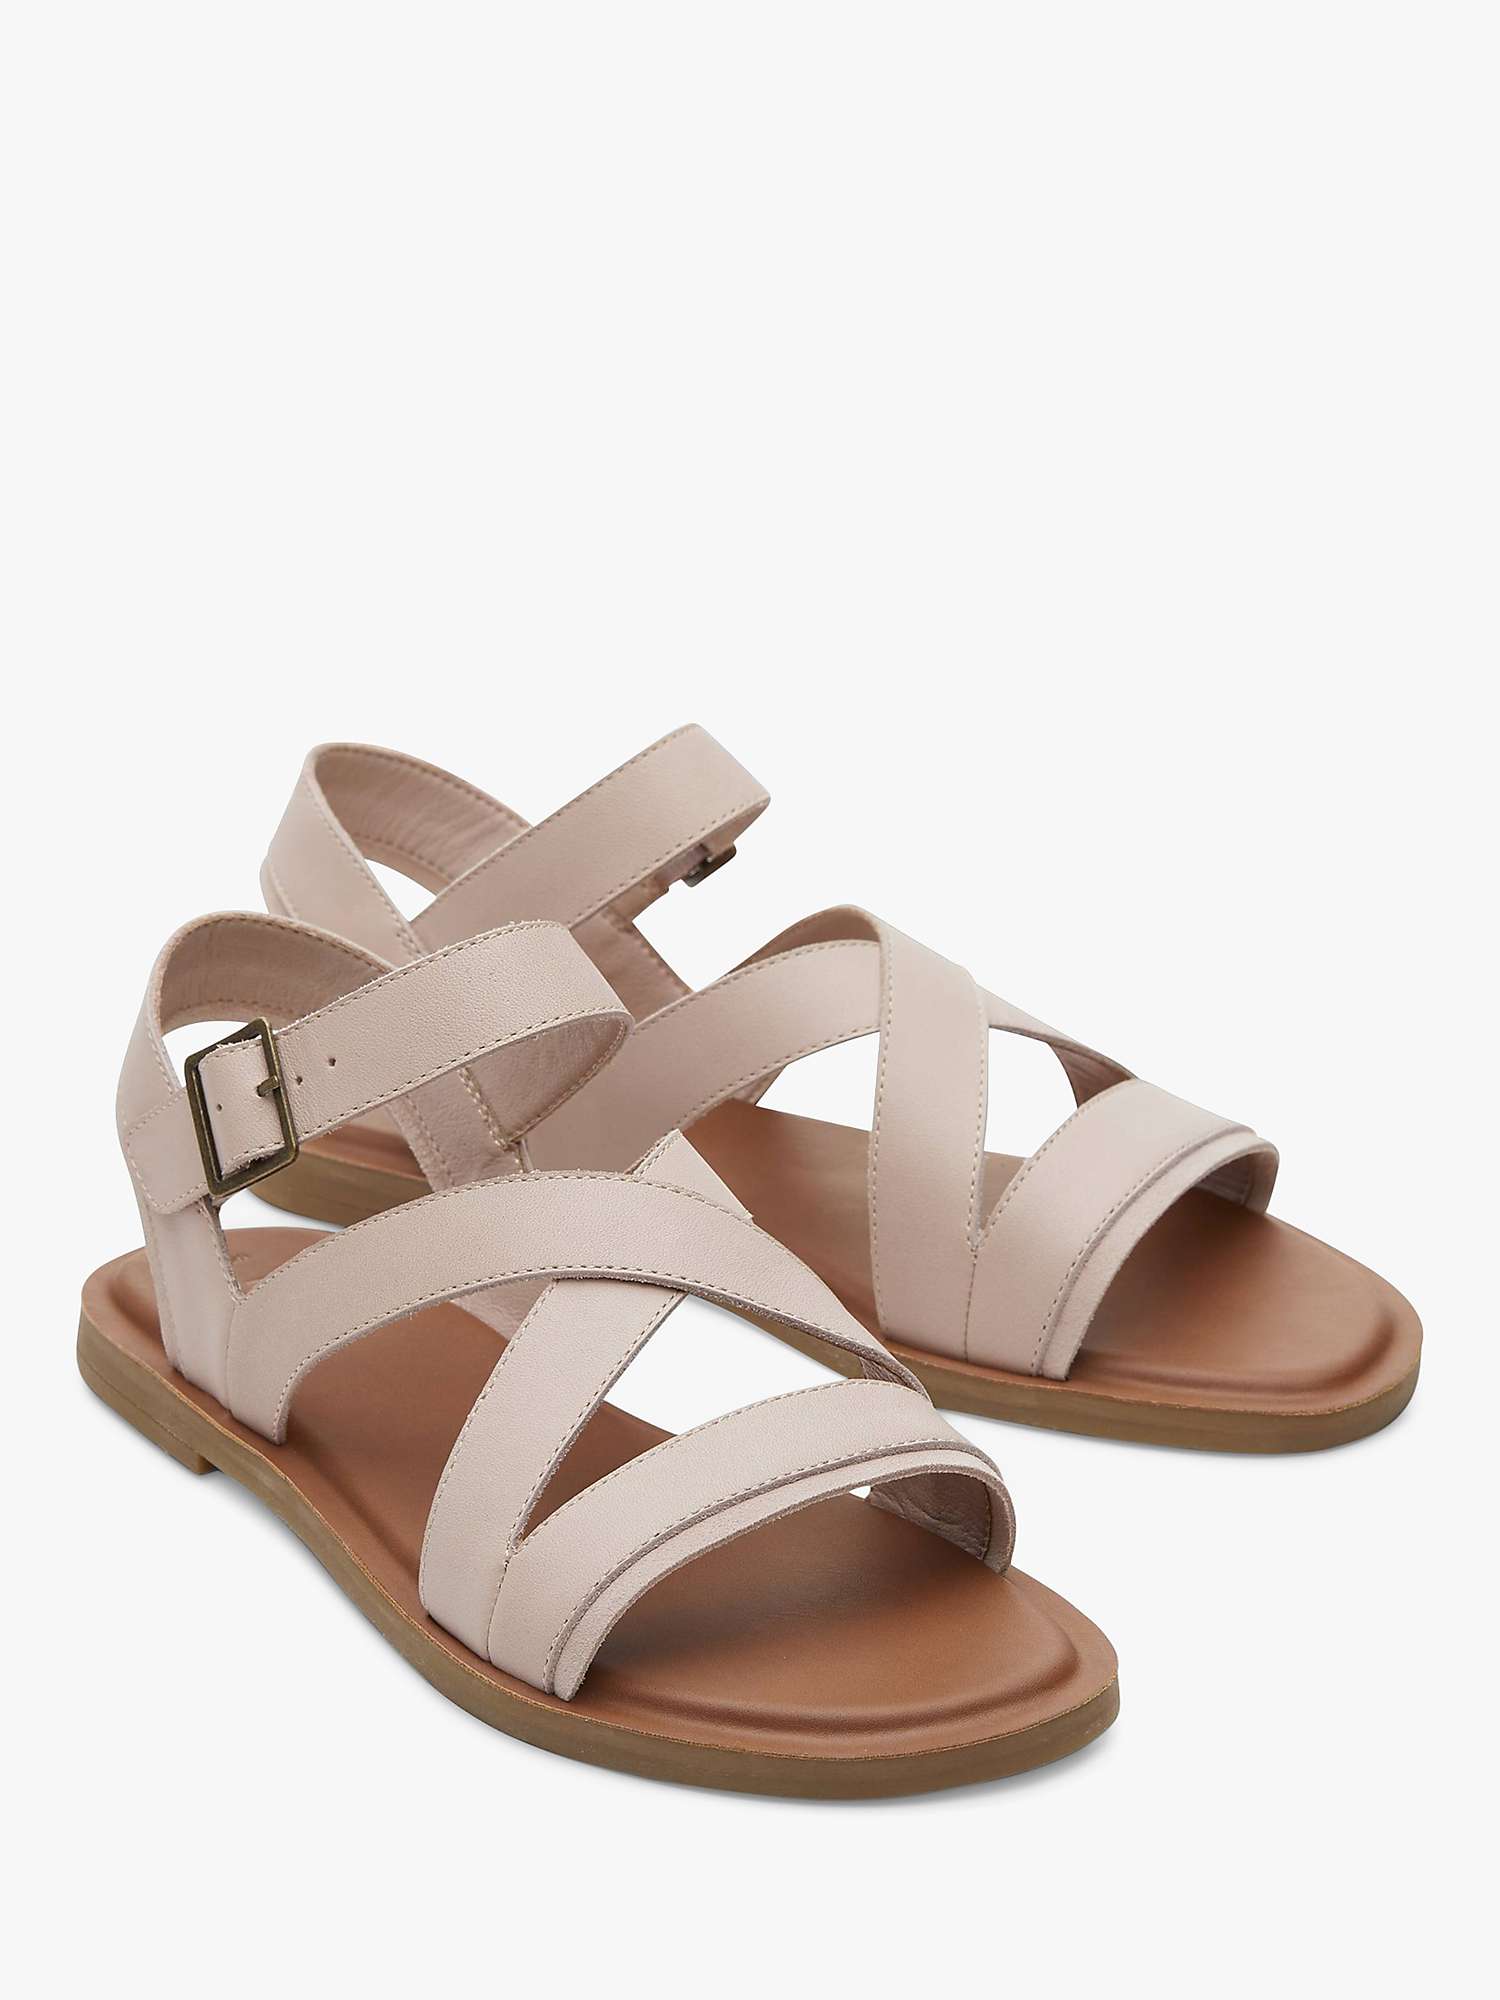 Buy TOMS Sloane Leather Sandals Online at johnlewis.com